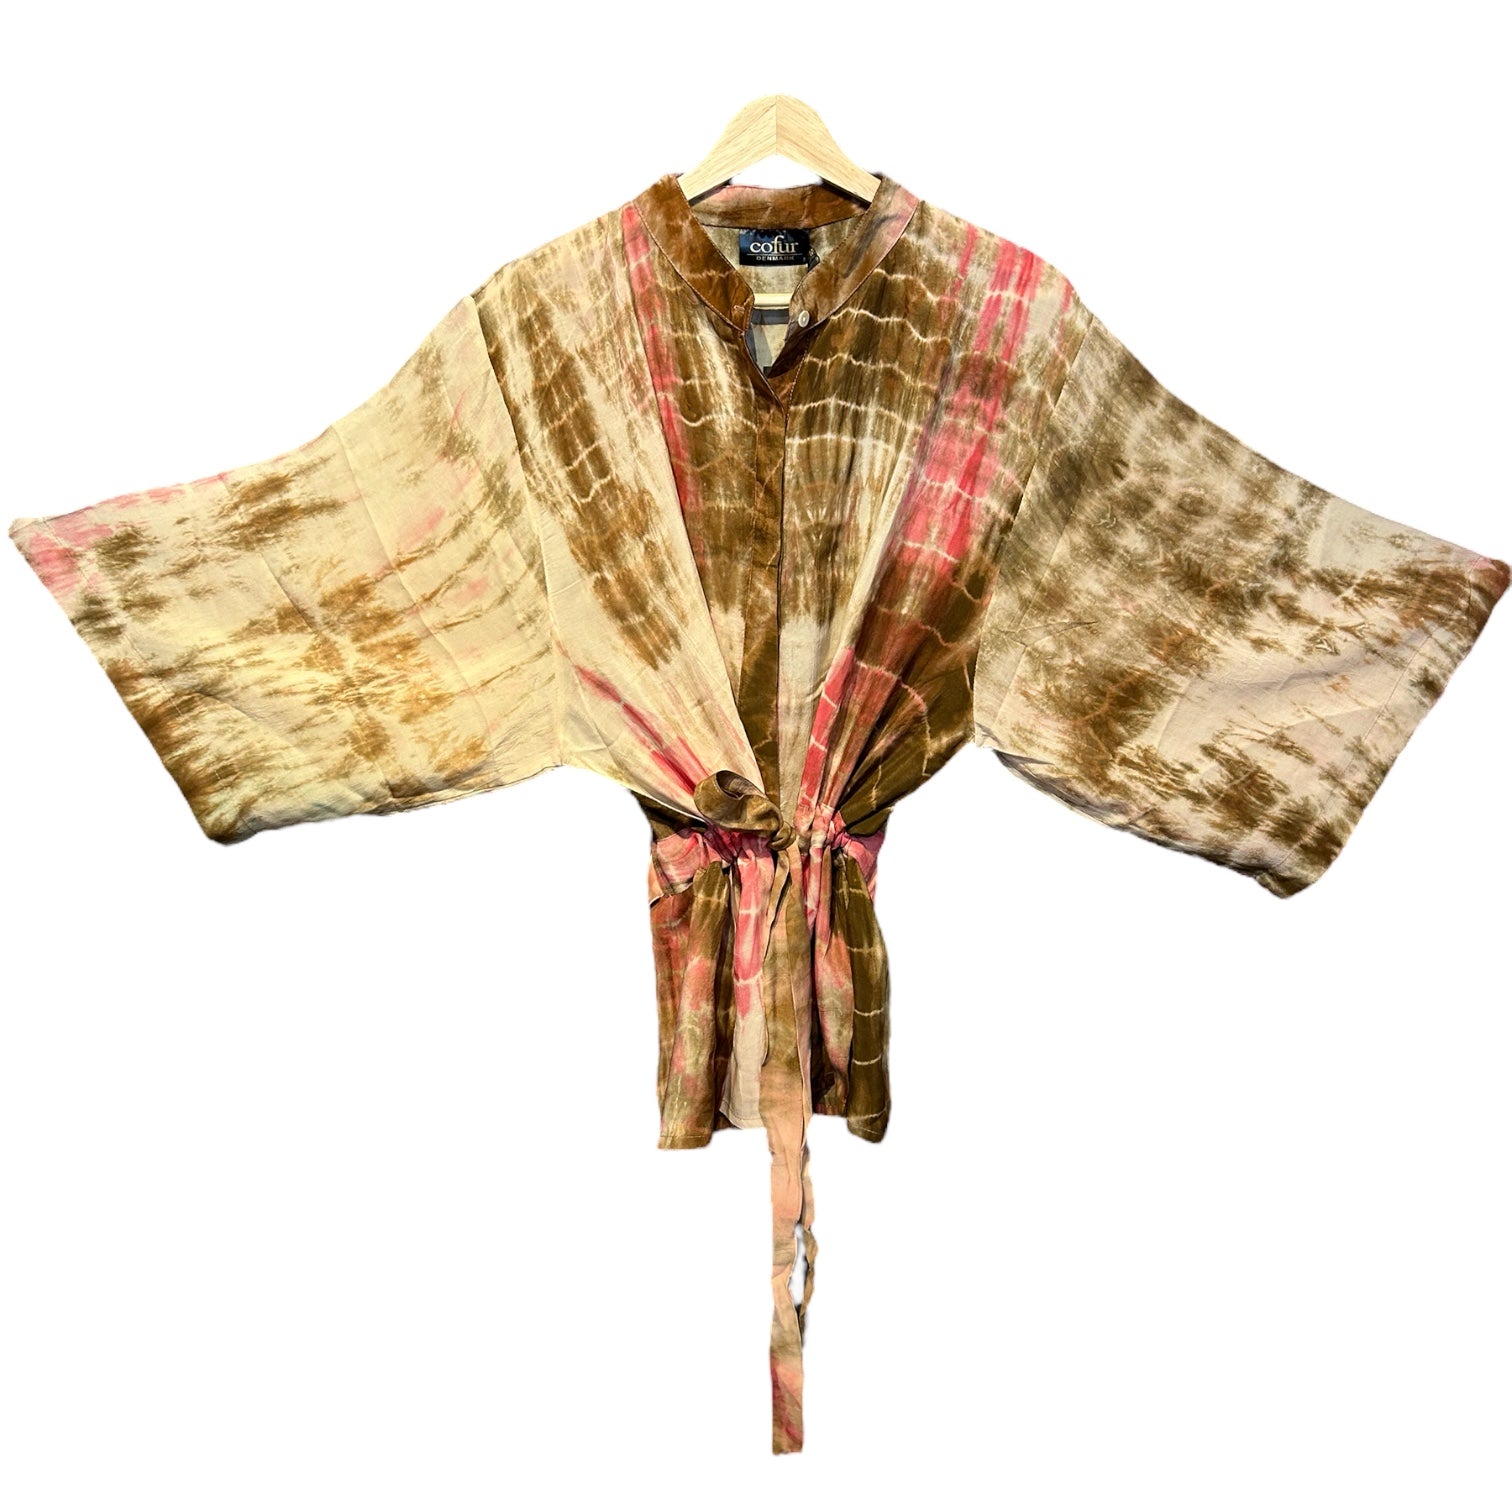 New York Kimono - No. 32 Size: S/M